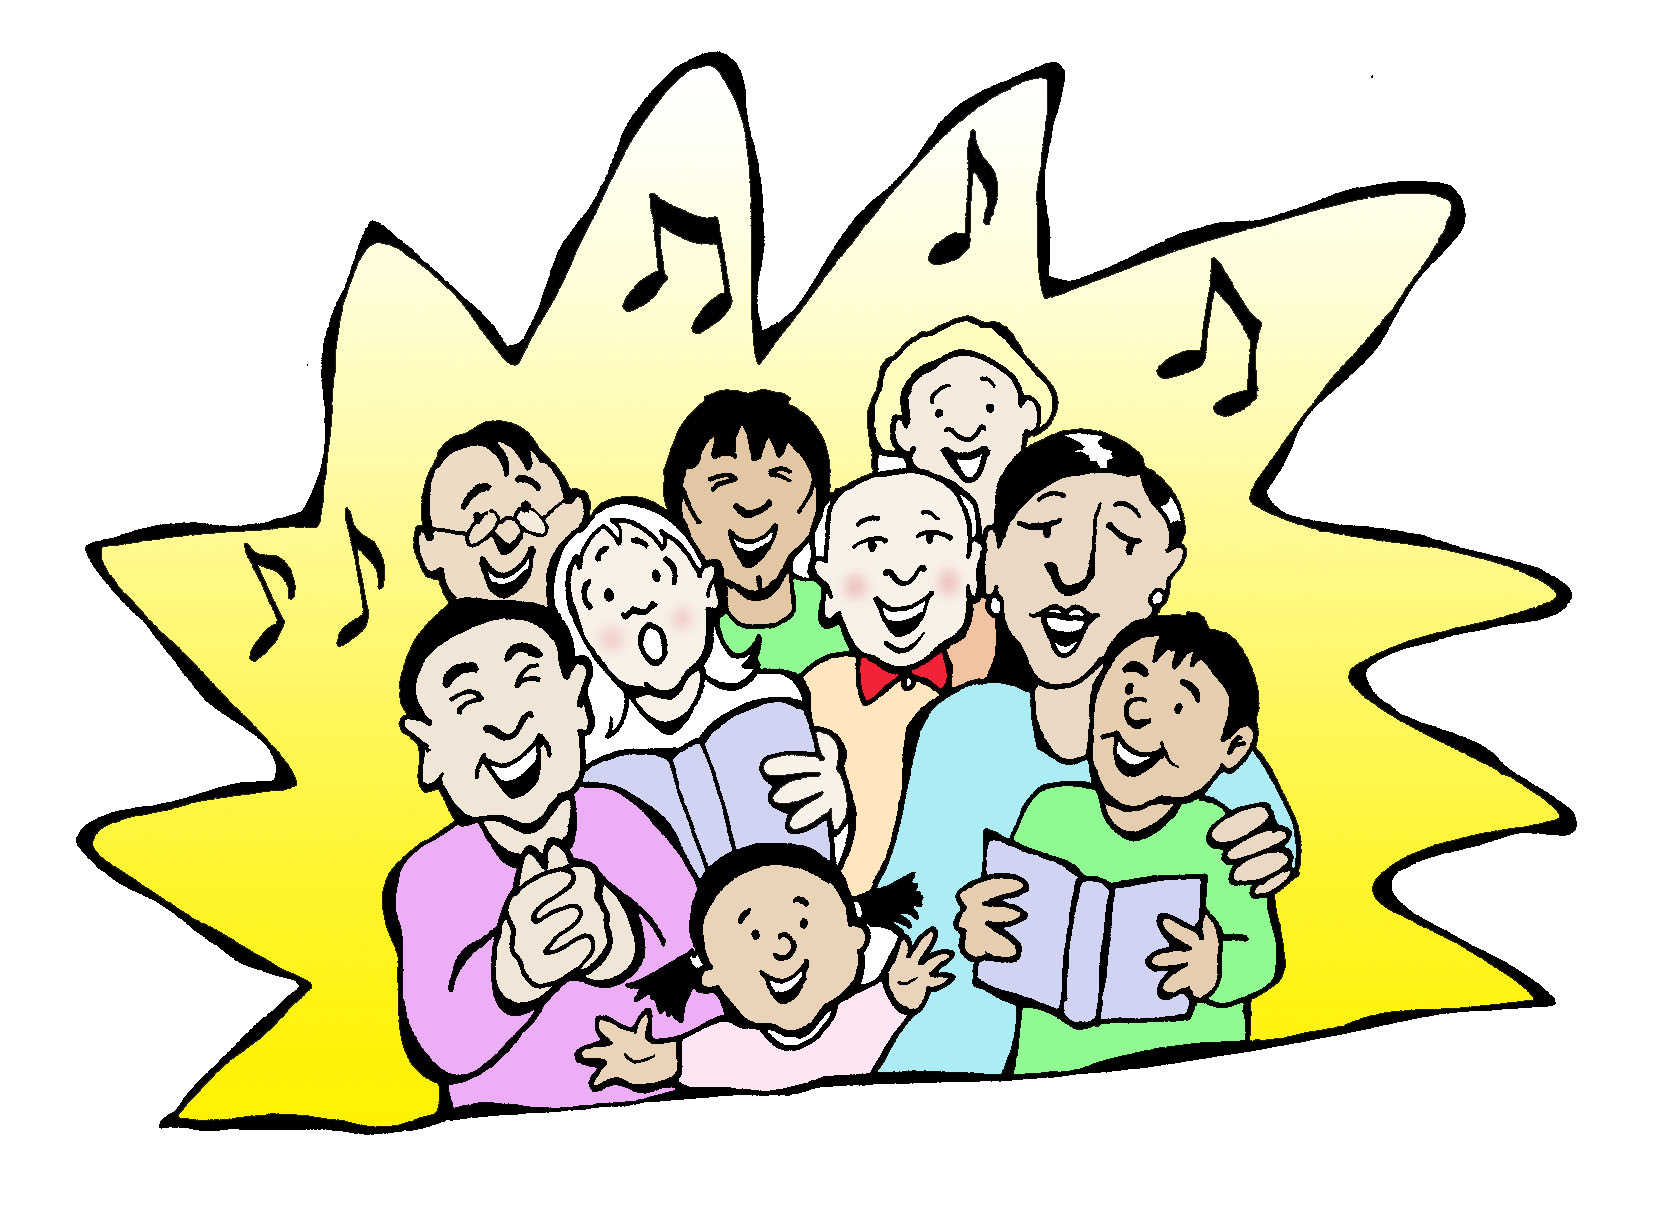 Animated Choir Singing drawing free image download